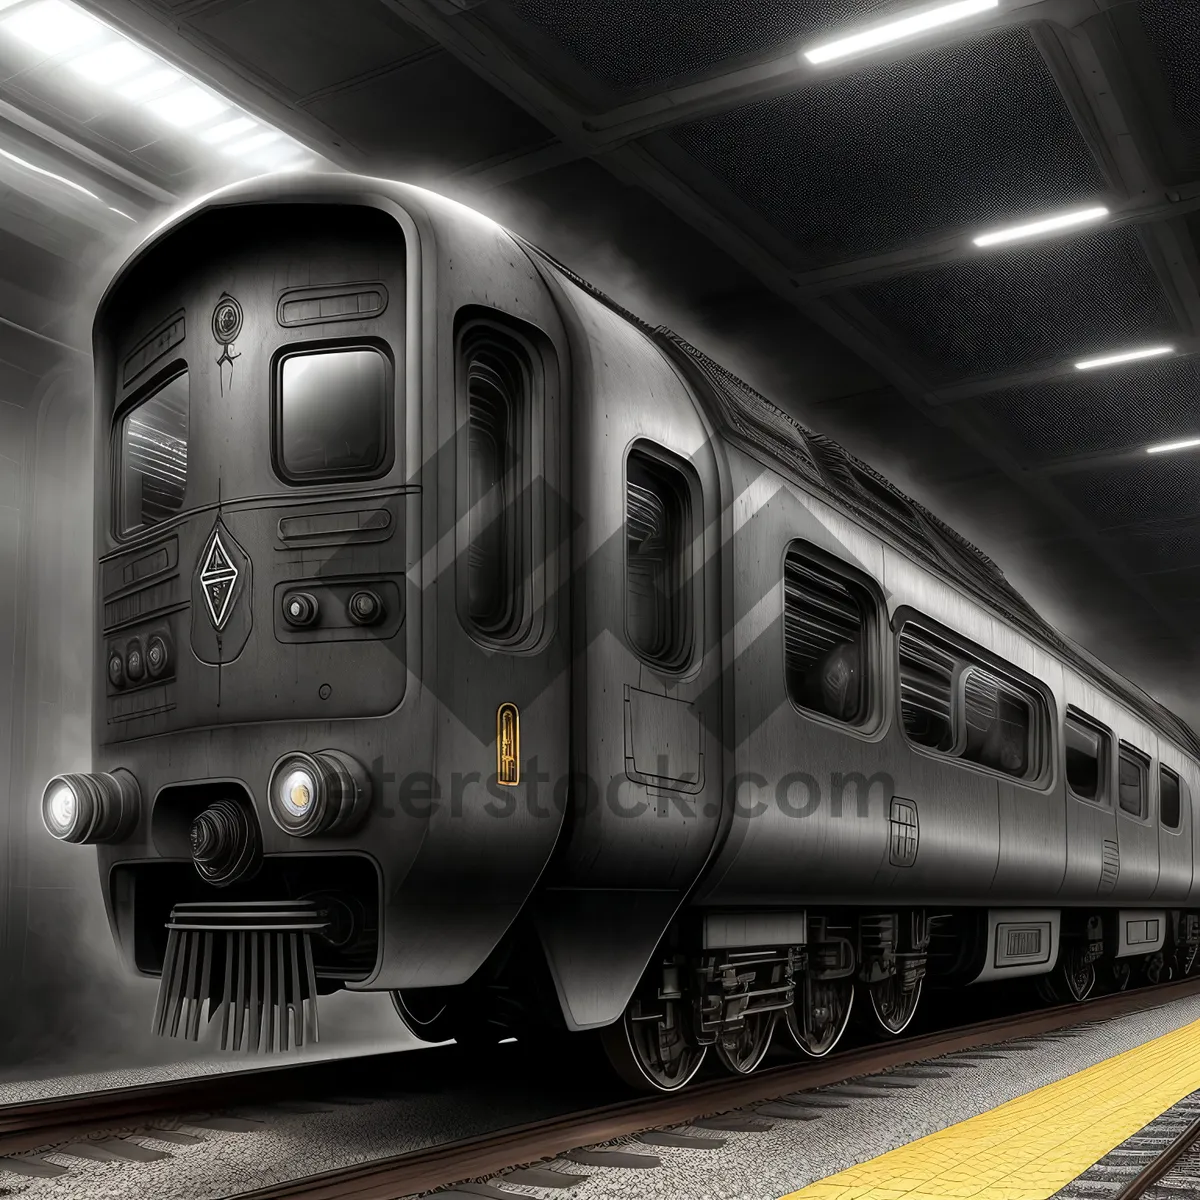 Picture of Urban Transit: Speeding Subway Train at Station